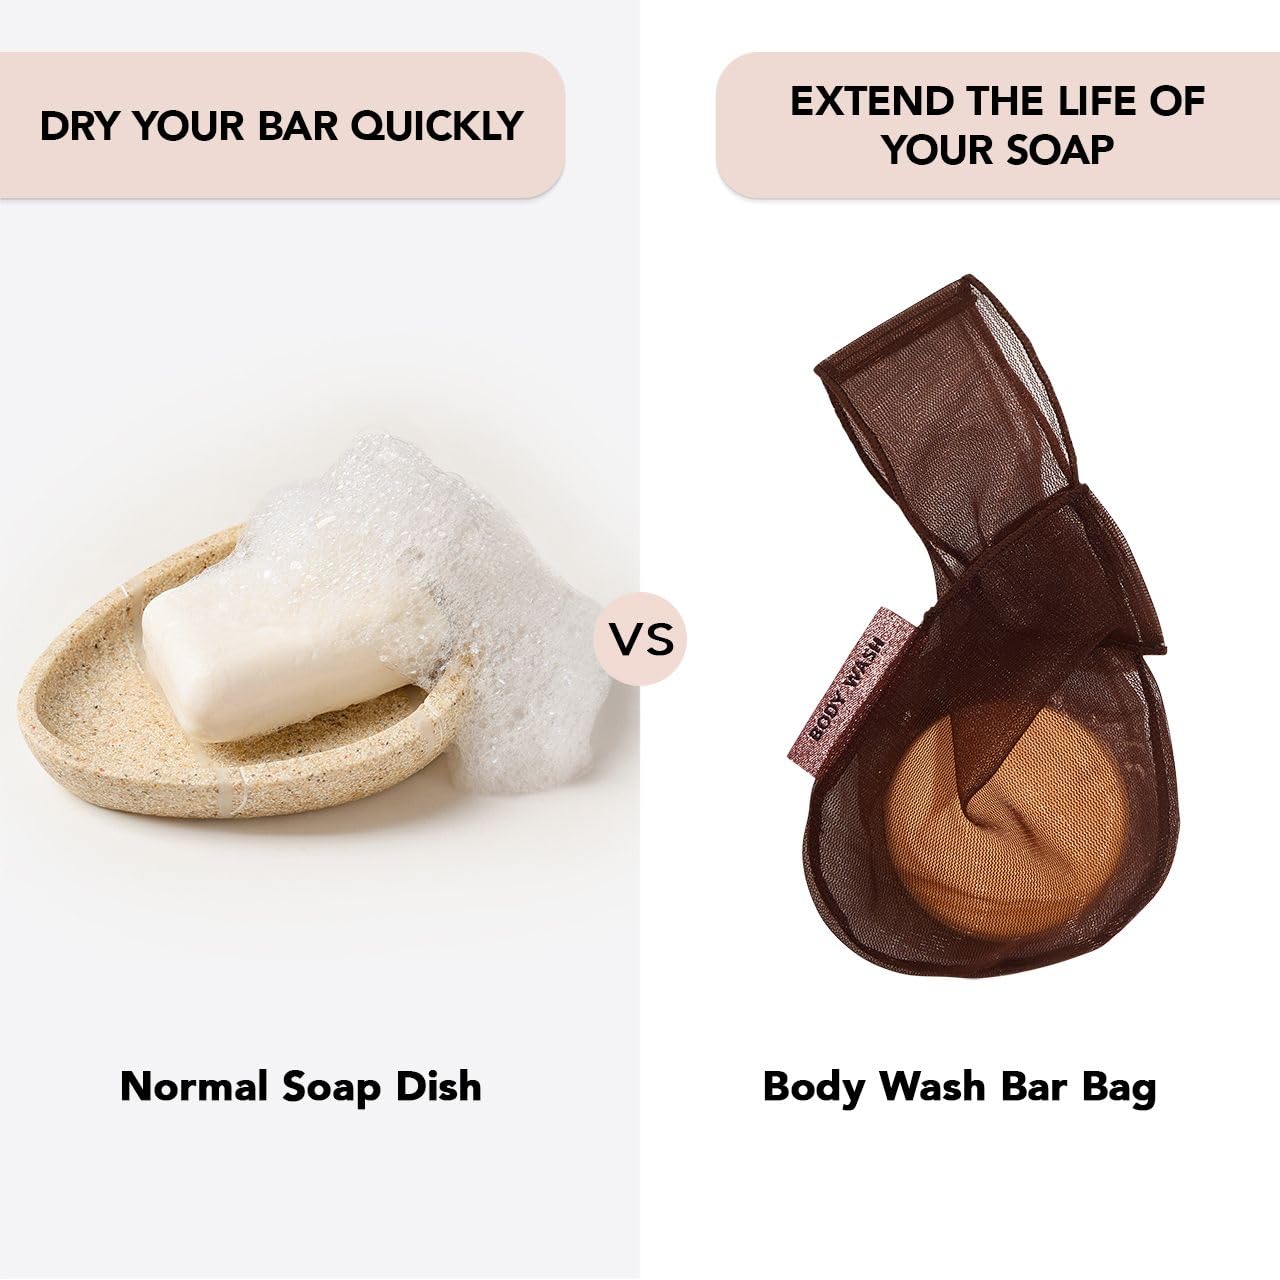 Shampoo & Body Bar Soap Saver Bag by Kitsch | Sustainable Bathroom